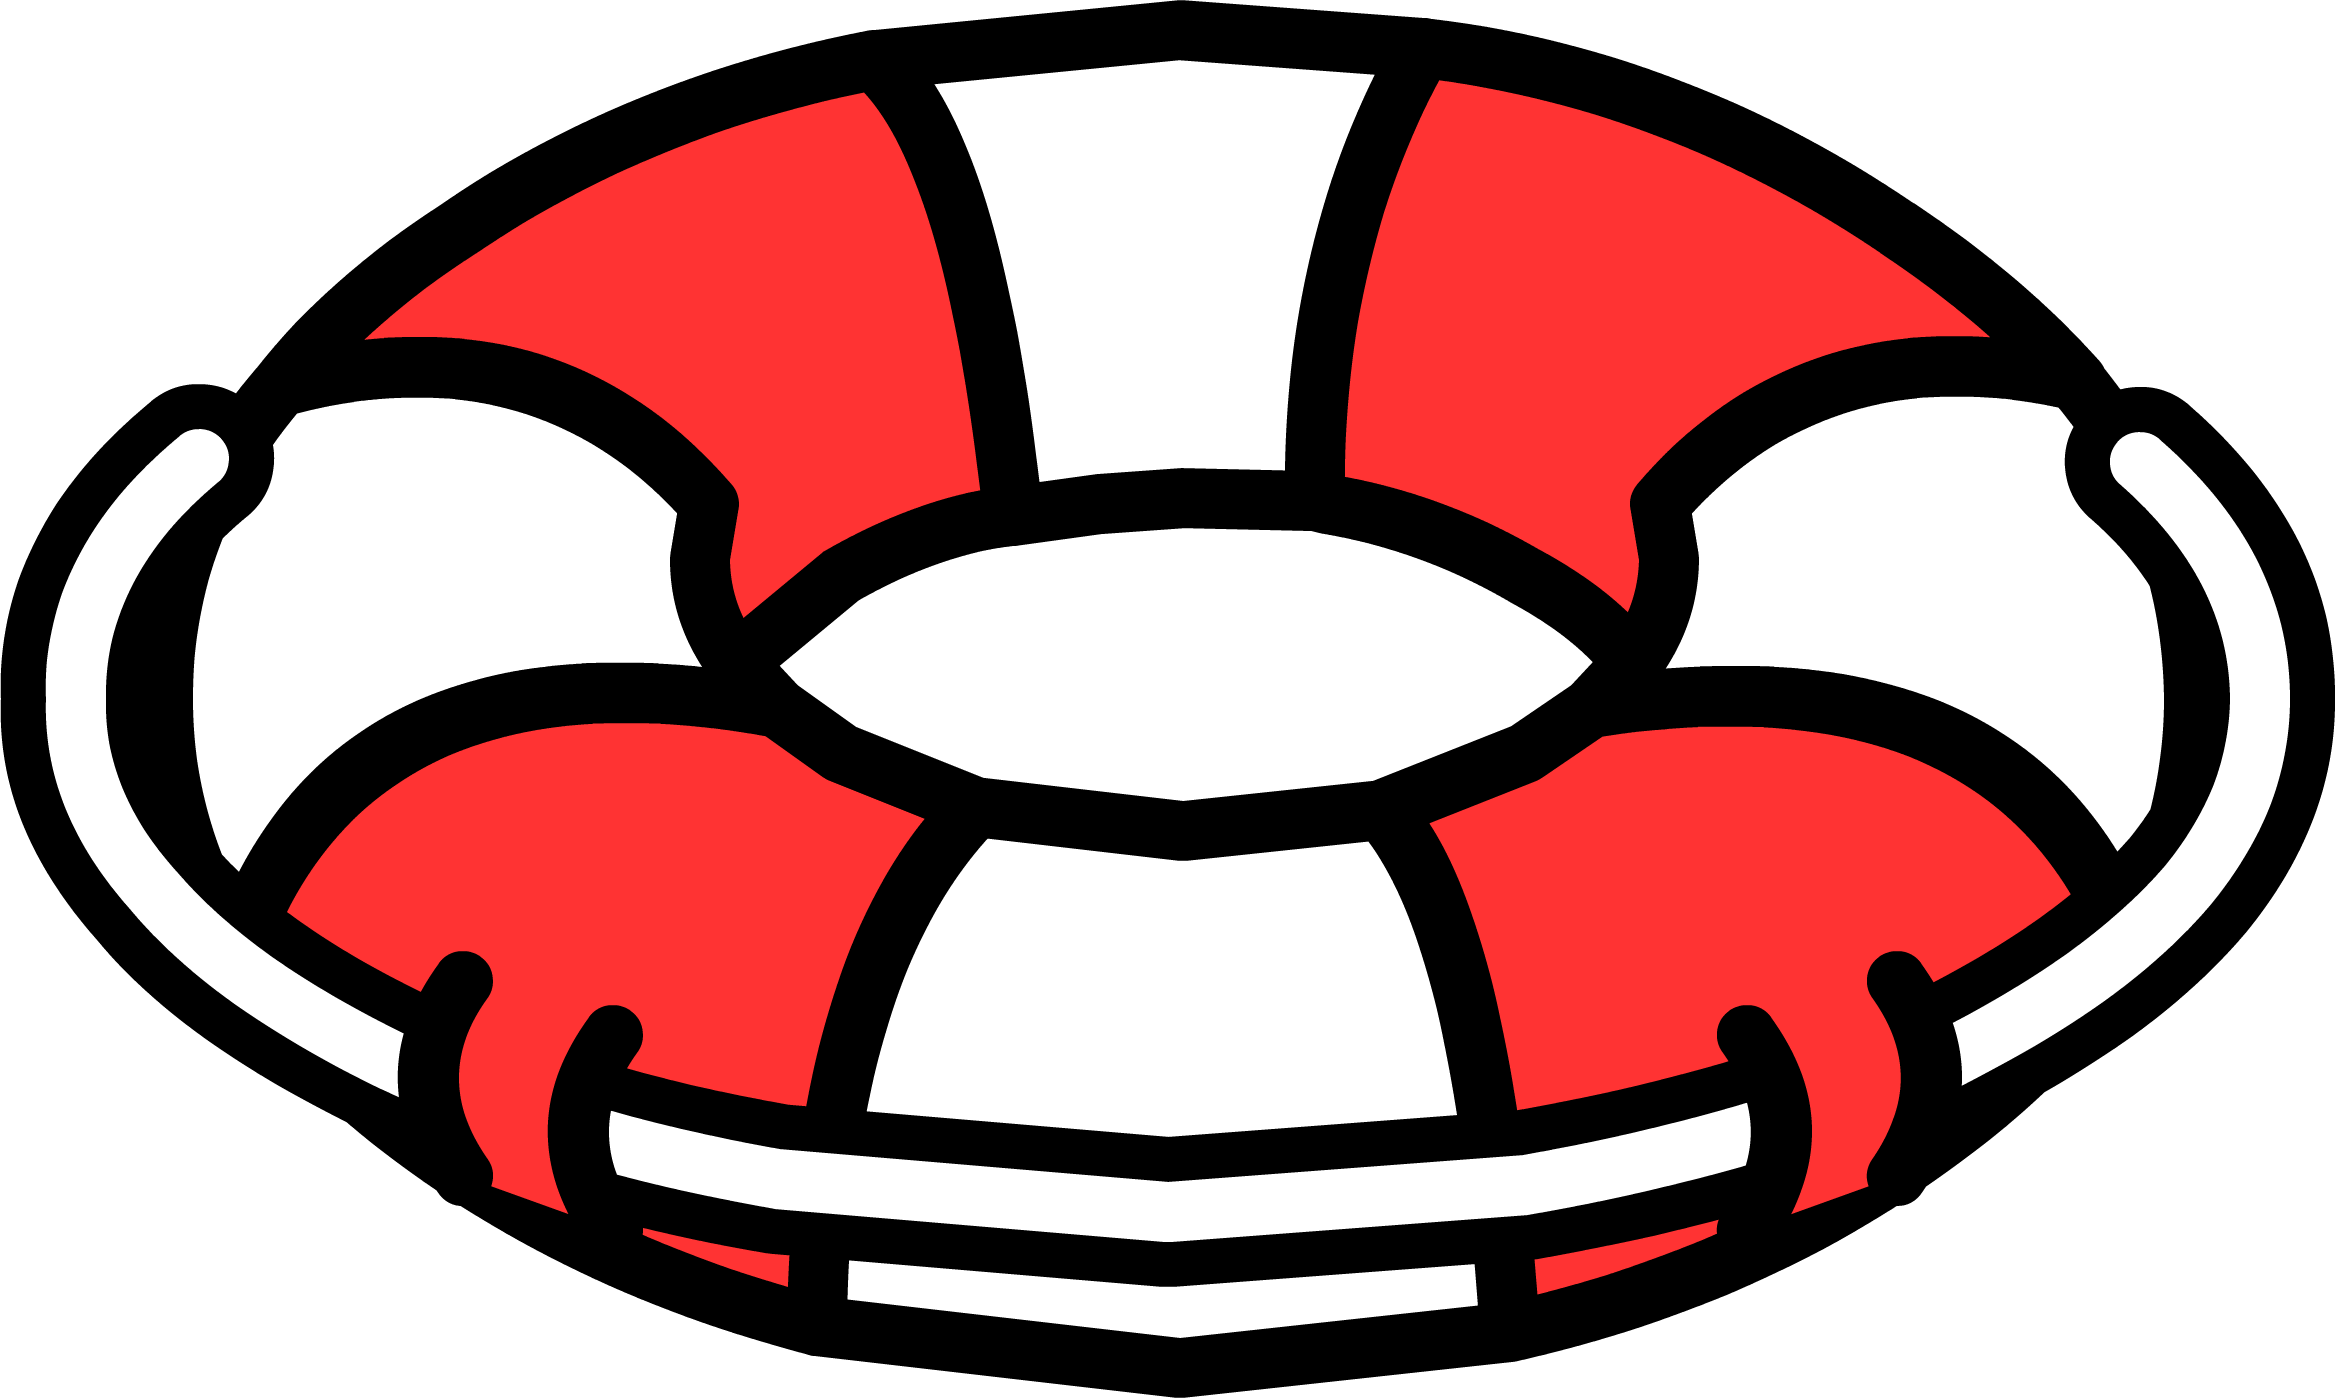 Lifeguard clipart life preserver. Ring club penguin wiki